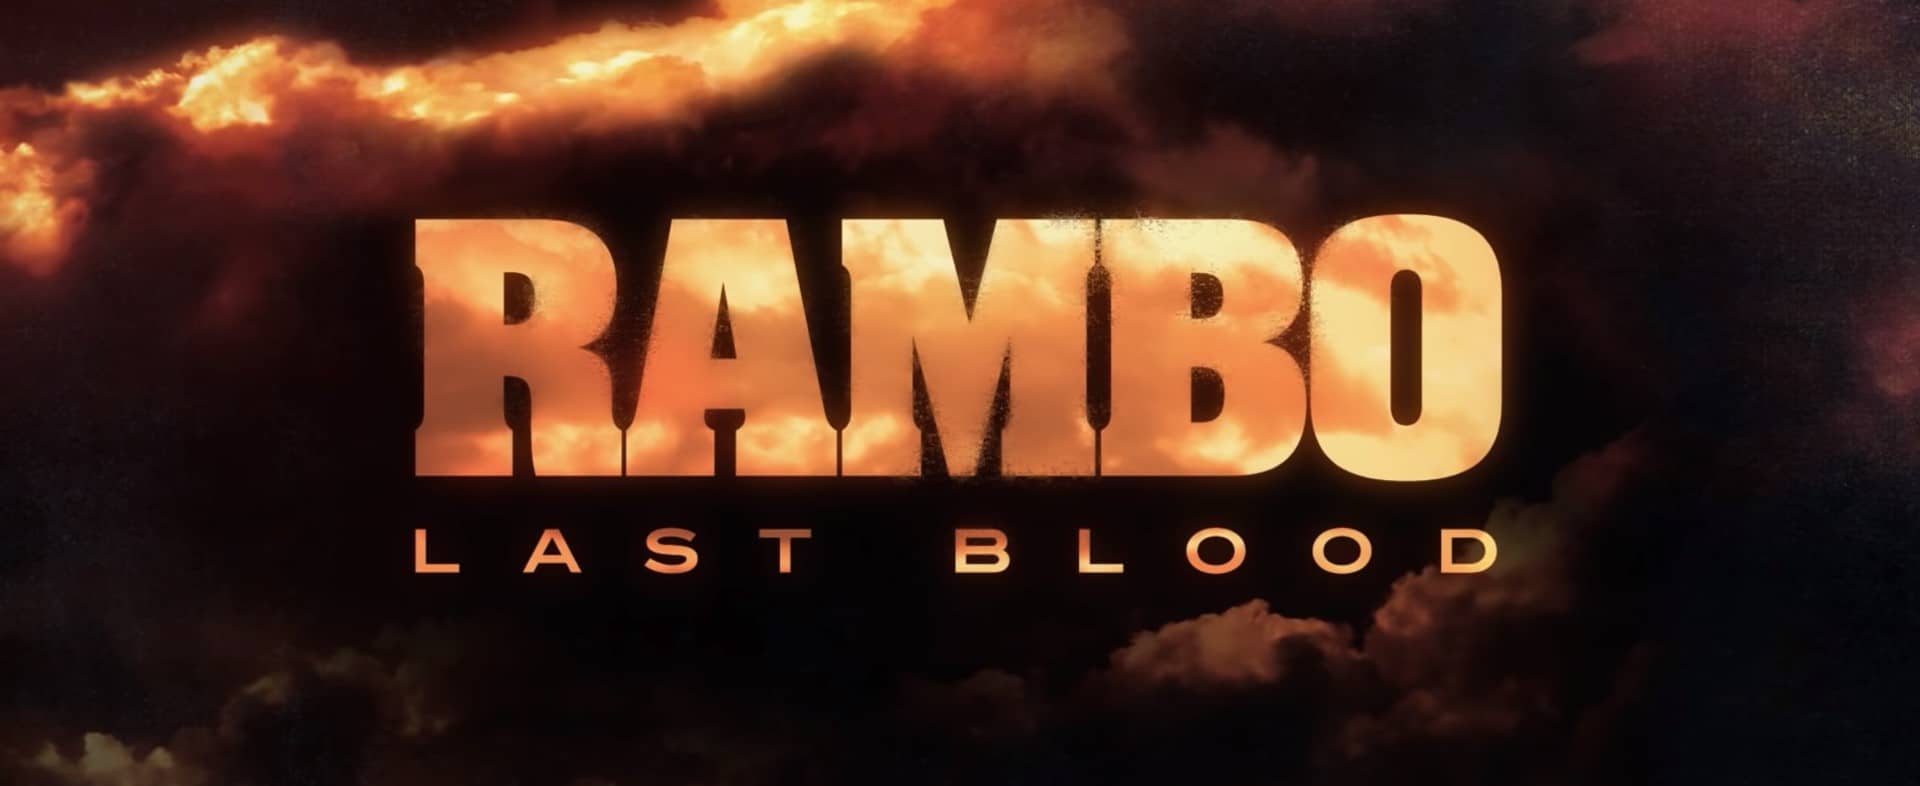 Rambo Last Blood 4